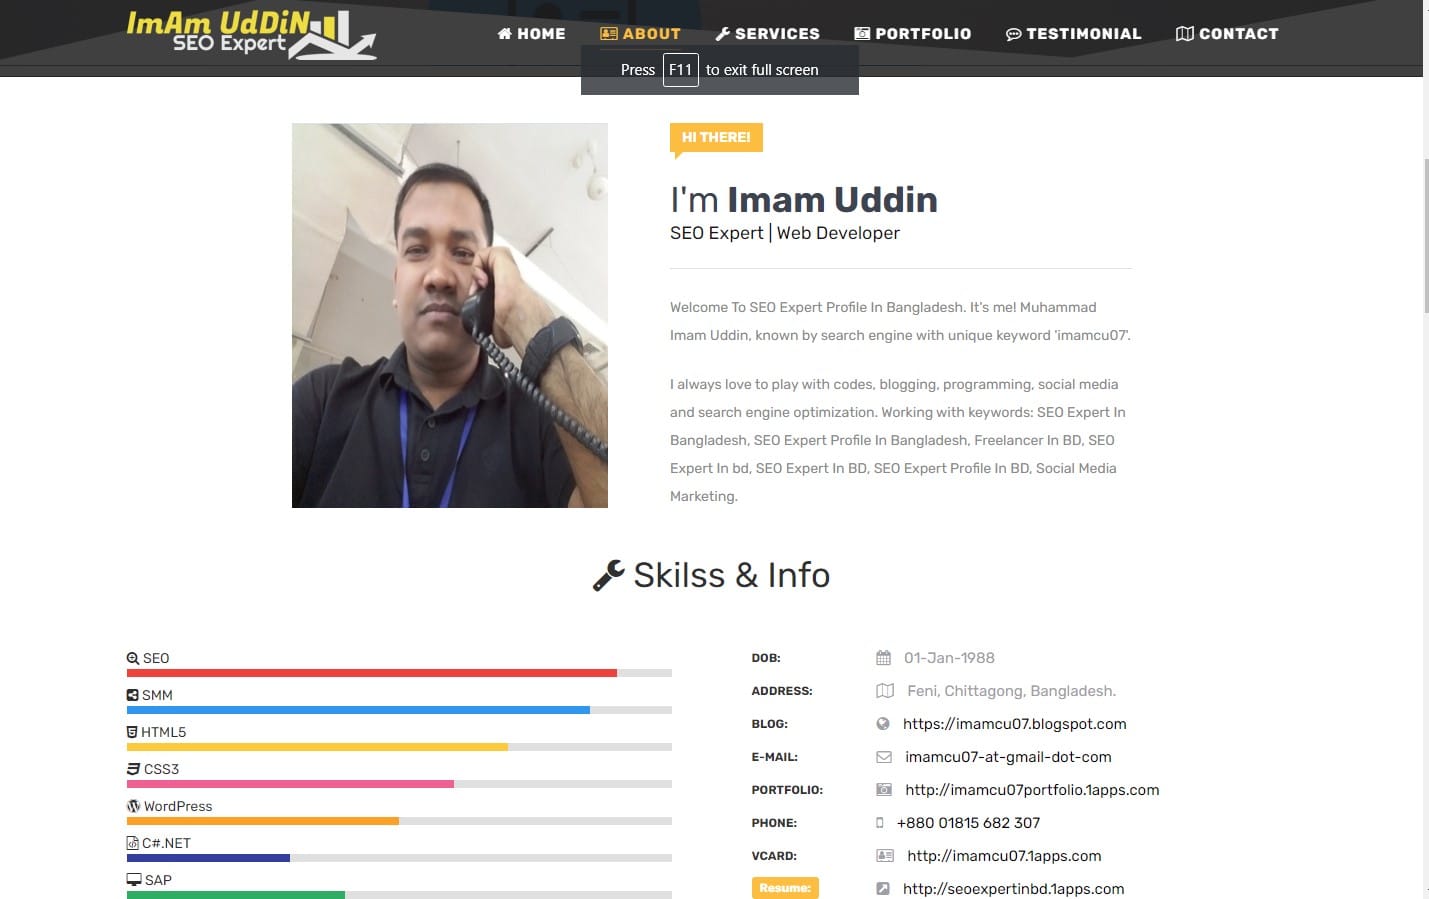 SEO Expert In Bangladesh, Imam Uddin, imamuddinwp